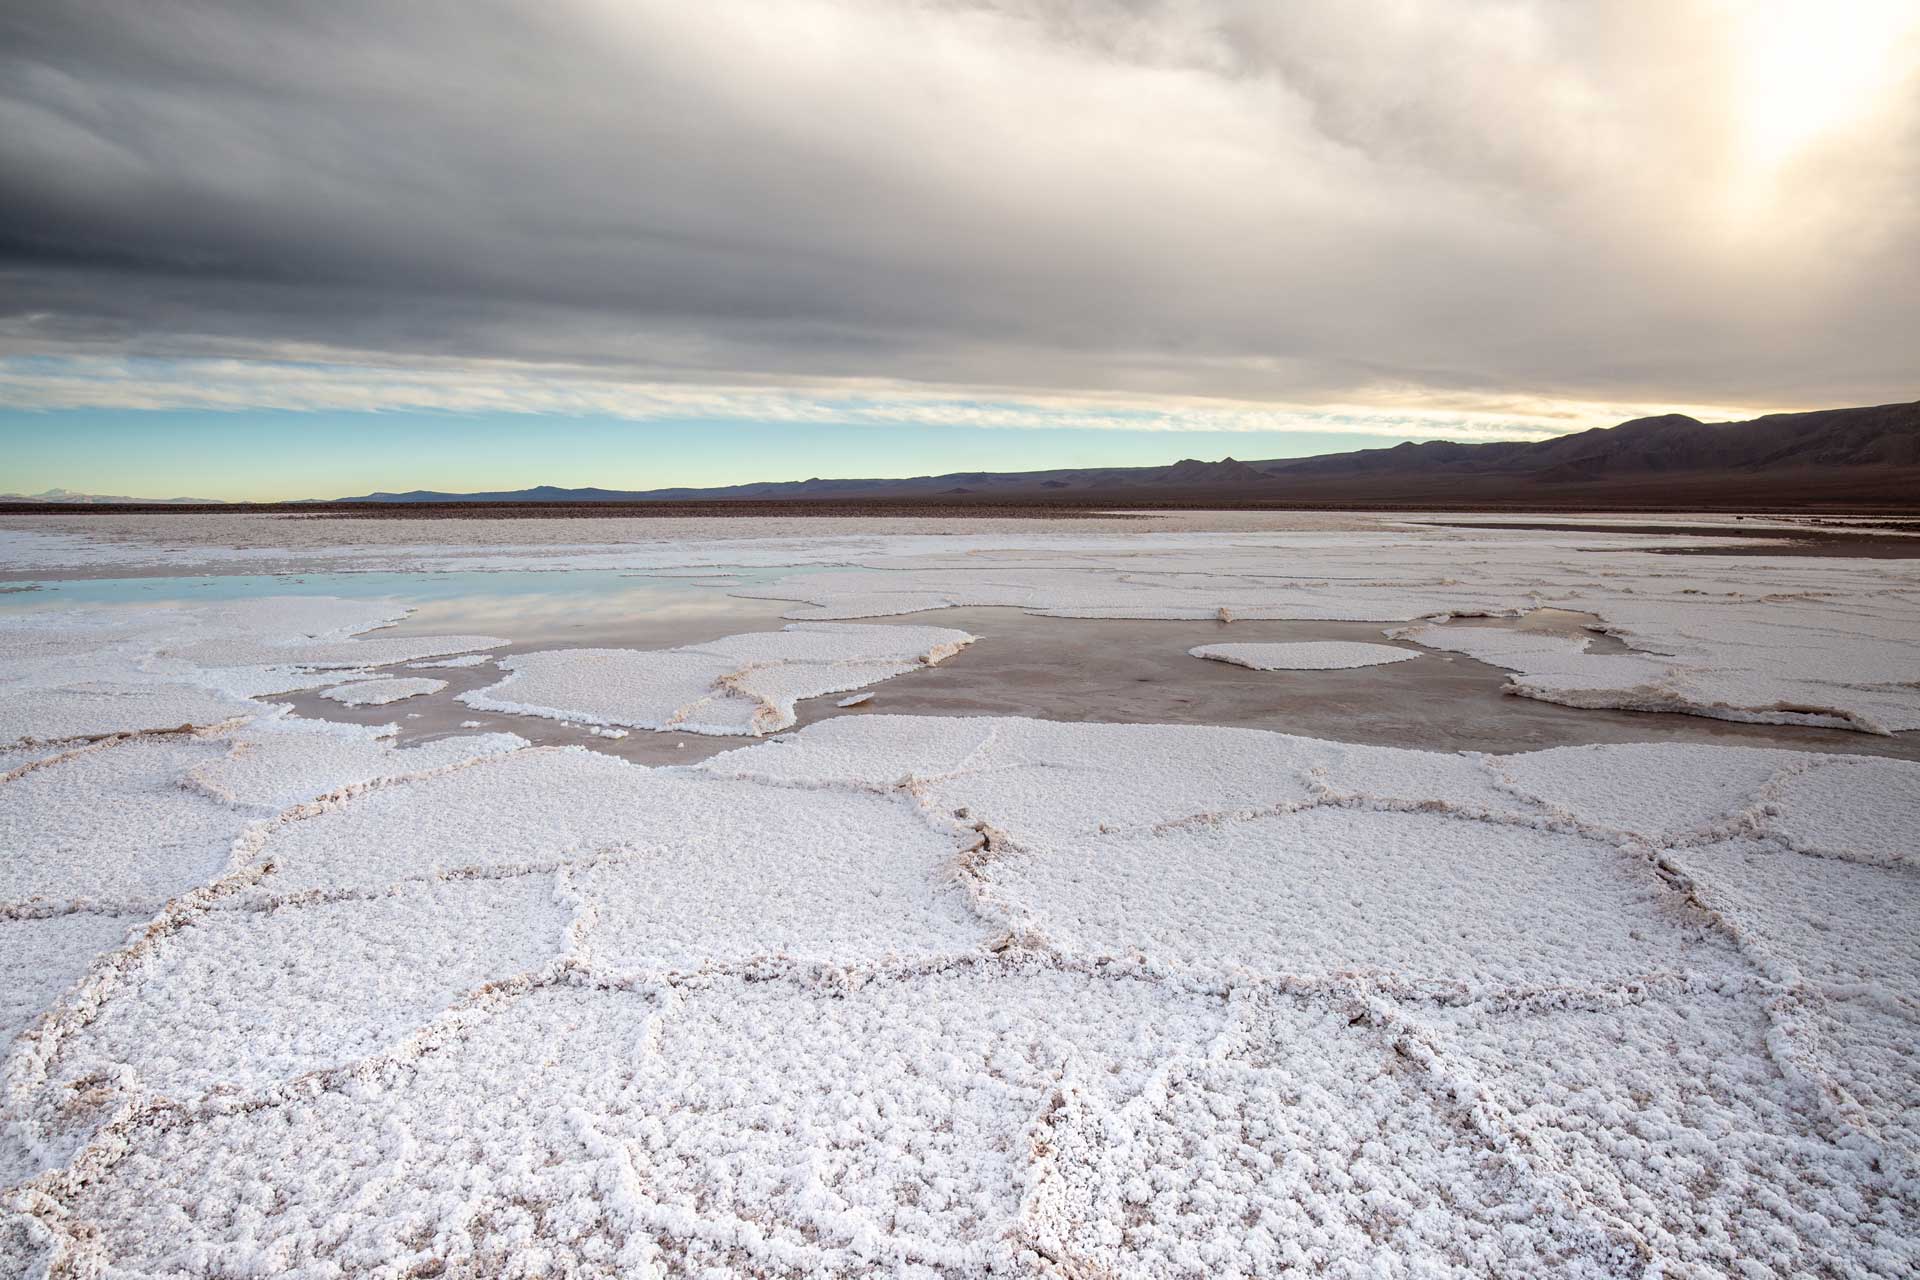 Altiplano Salt Flats